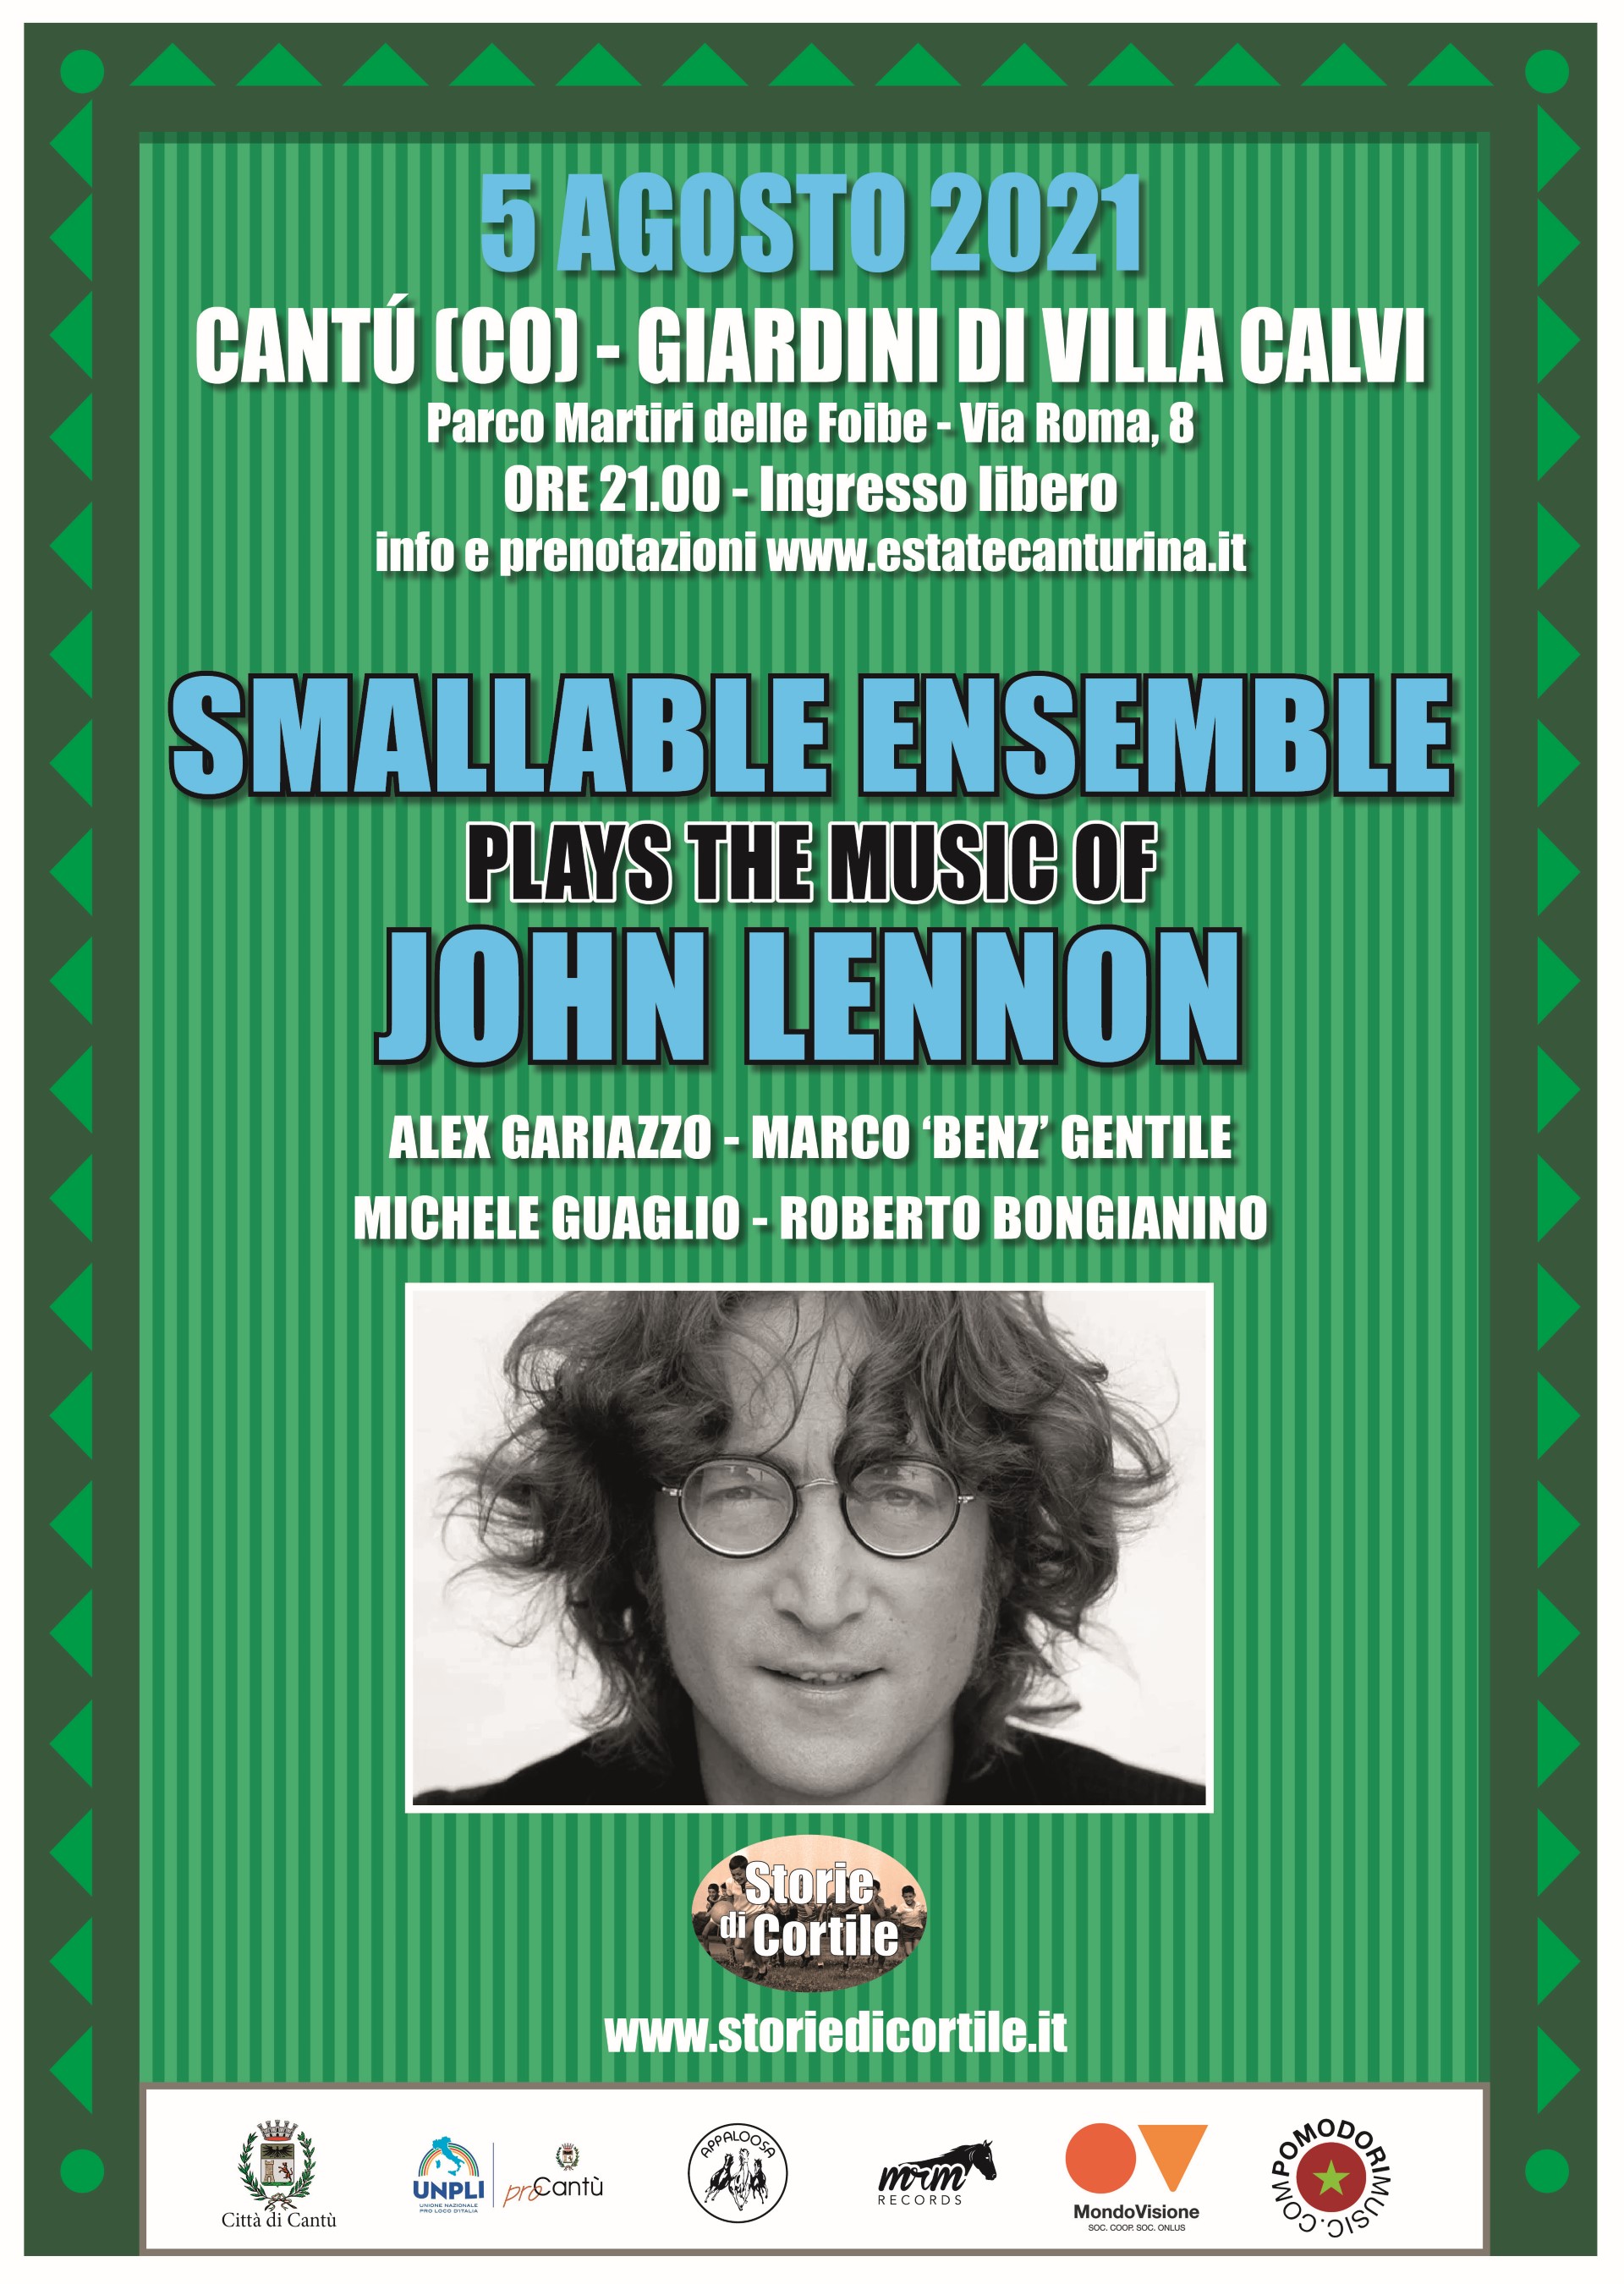 05/08/2021 - Cantù - Smallable Ensemble plays the music of John Lennon